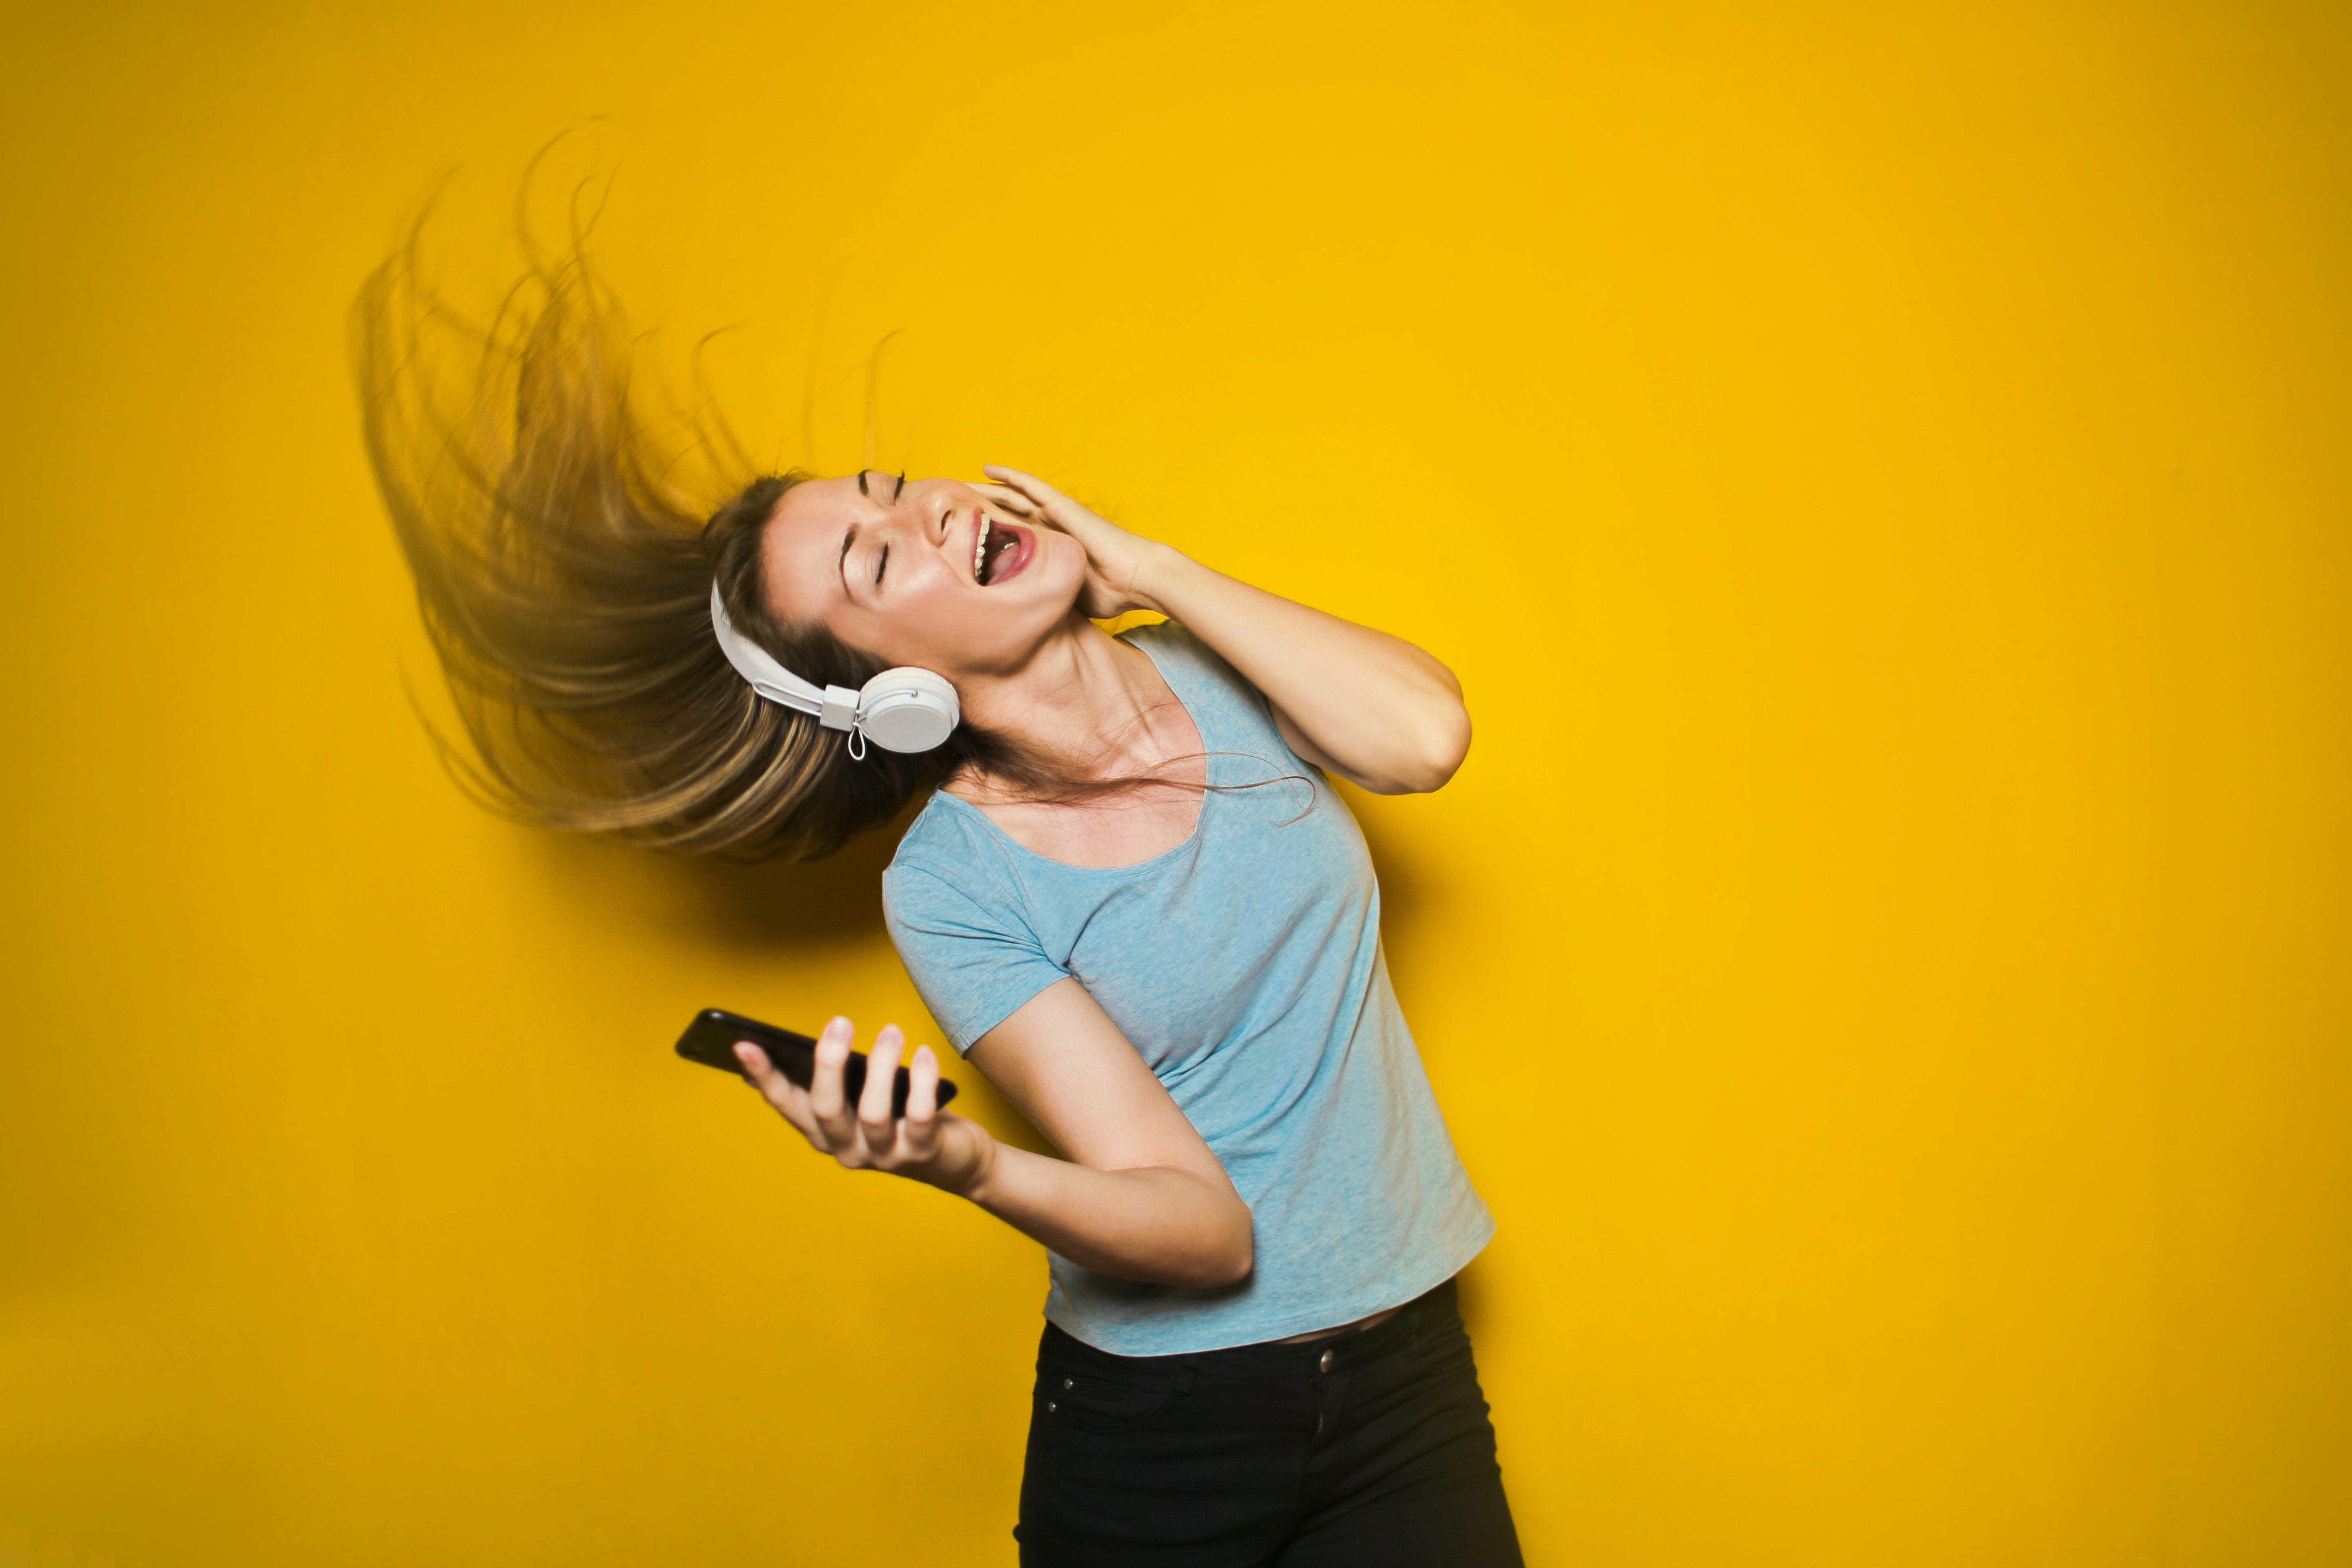 Teen-aged girl dancing with headphones on.